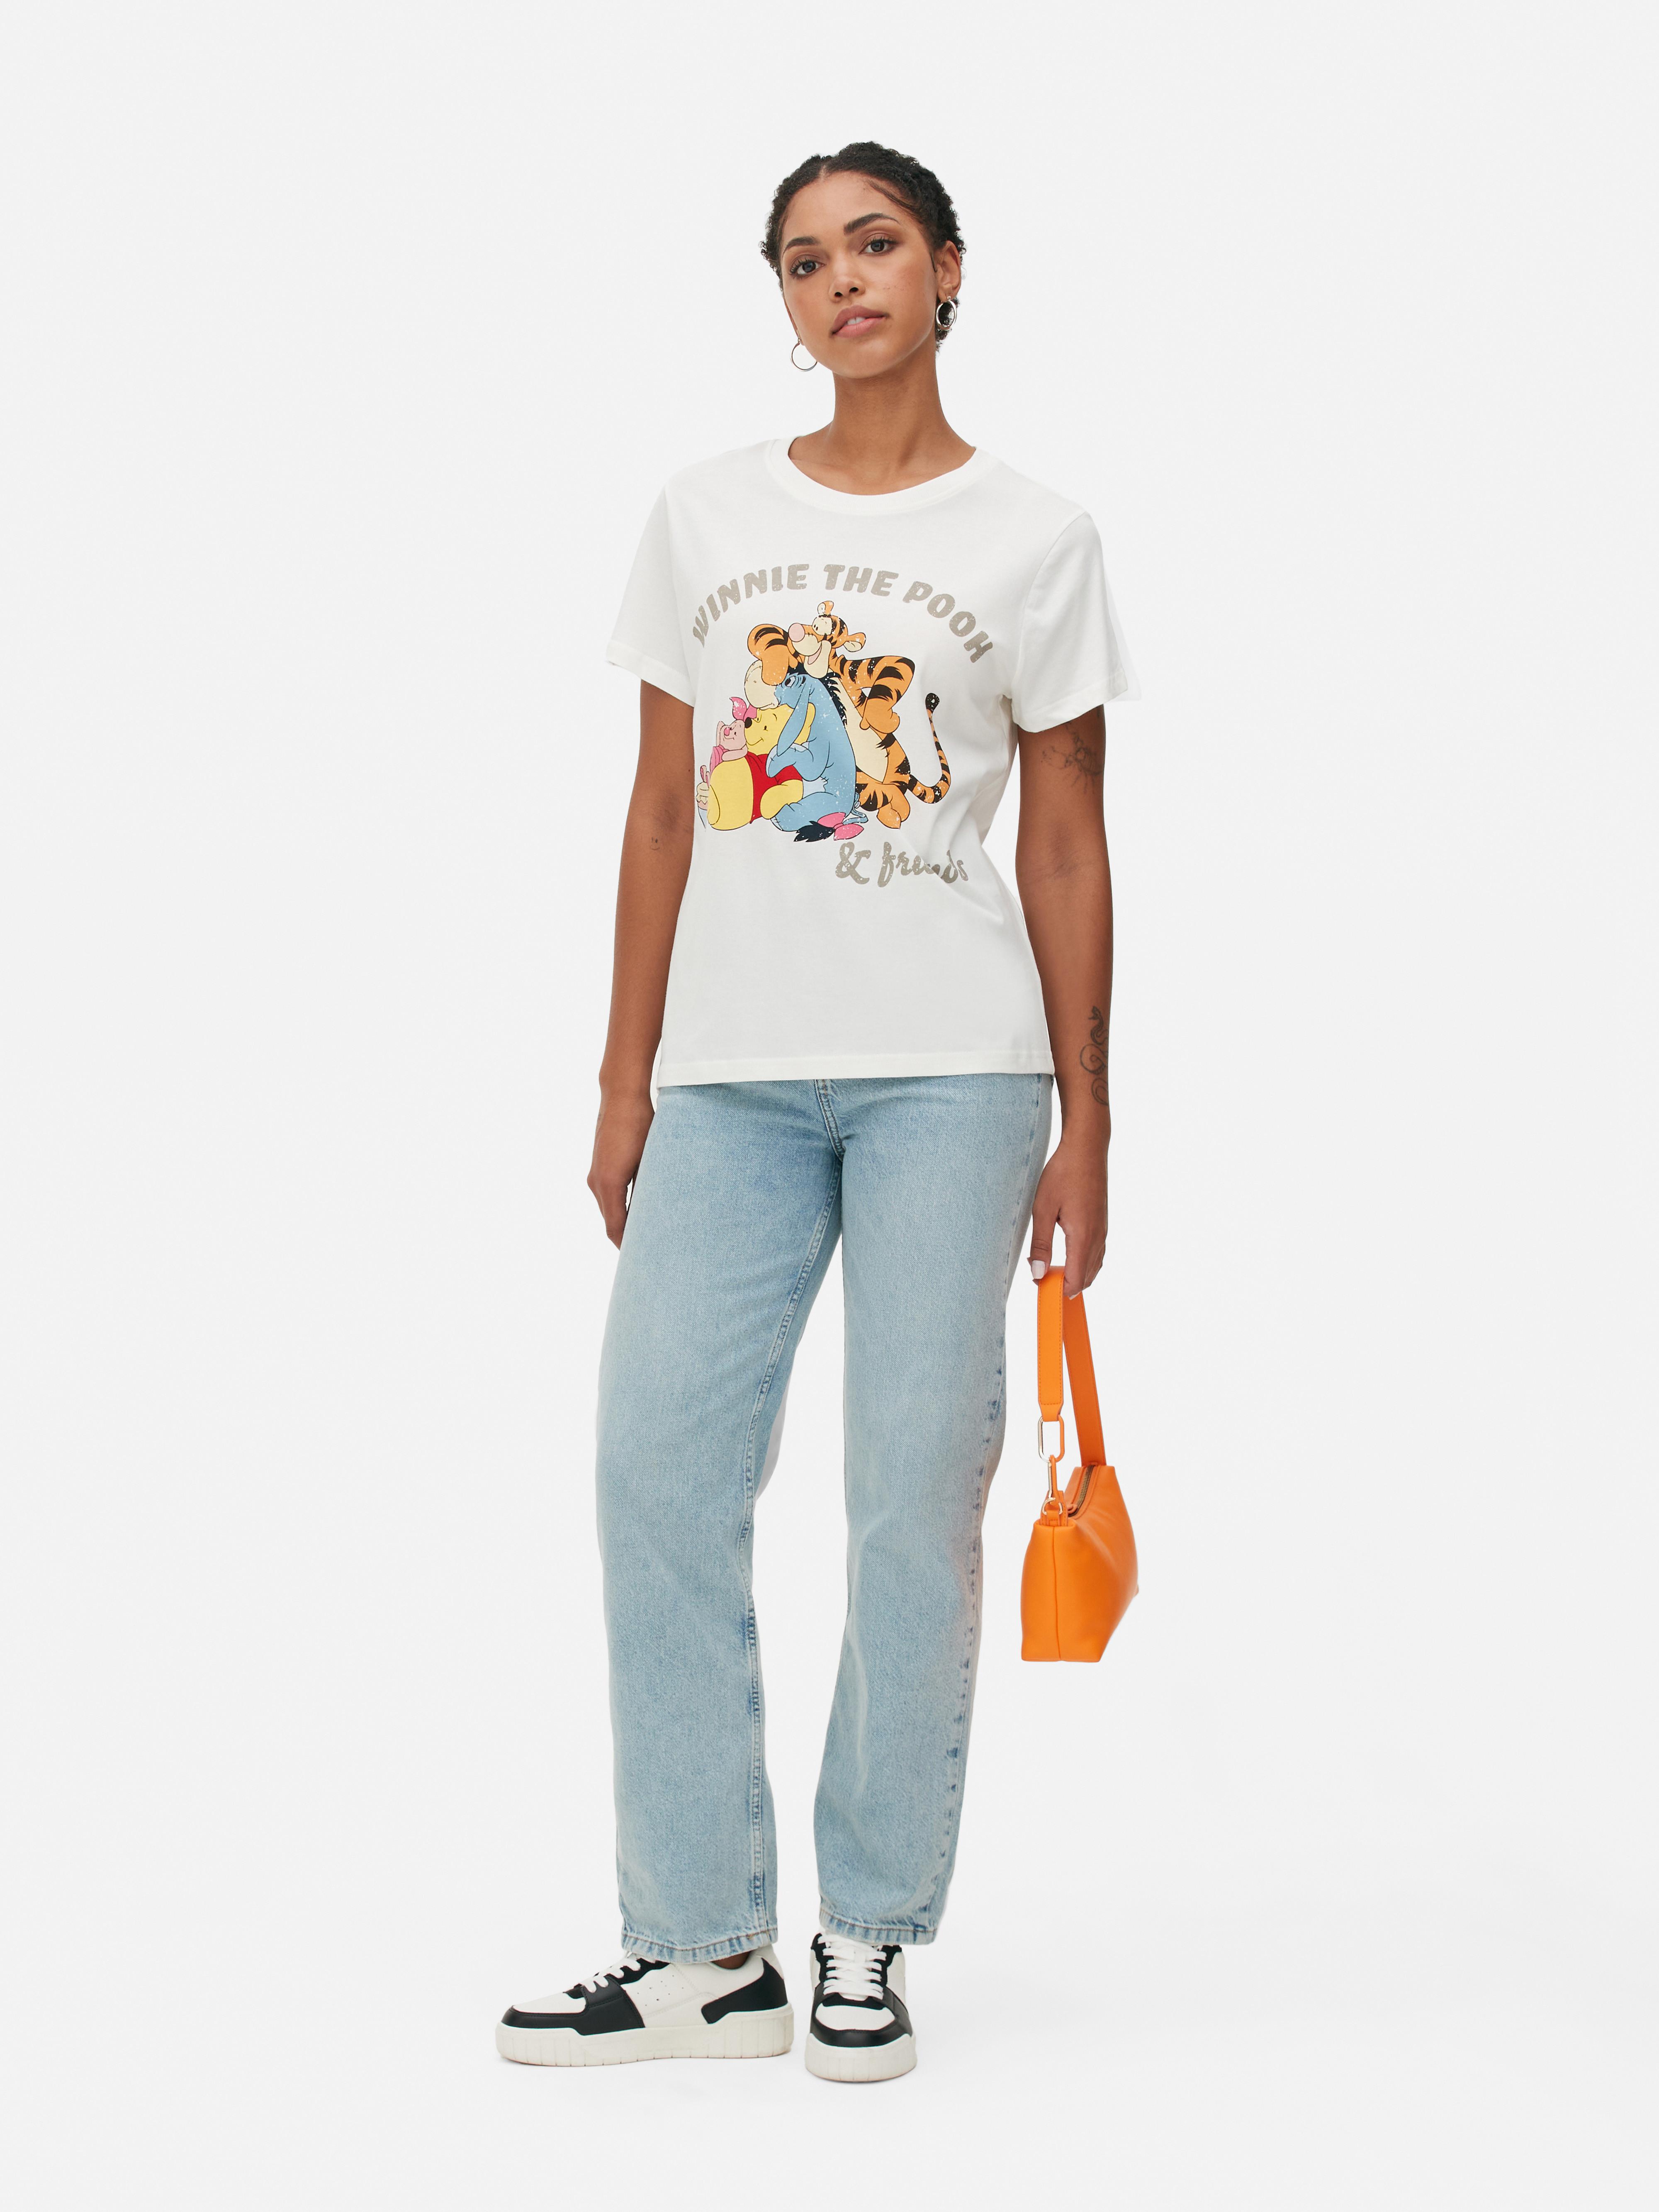 Disney’s Winnie the Pooh and Friends T-shirt